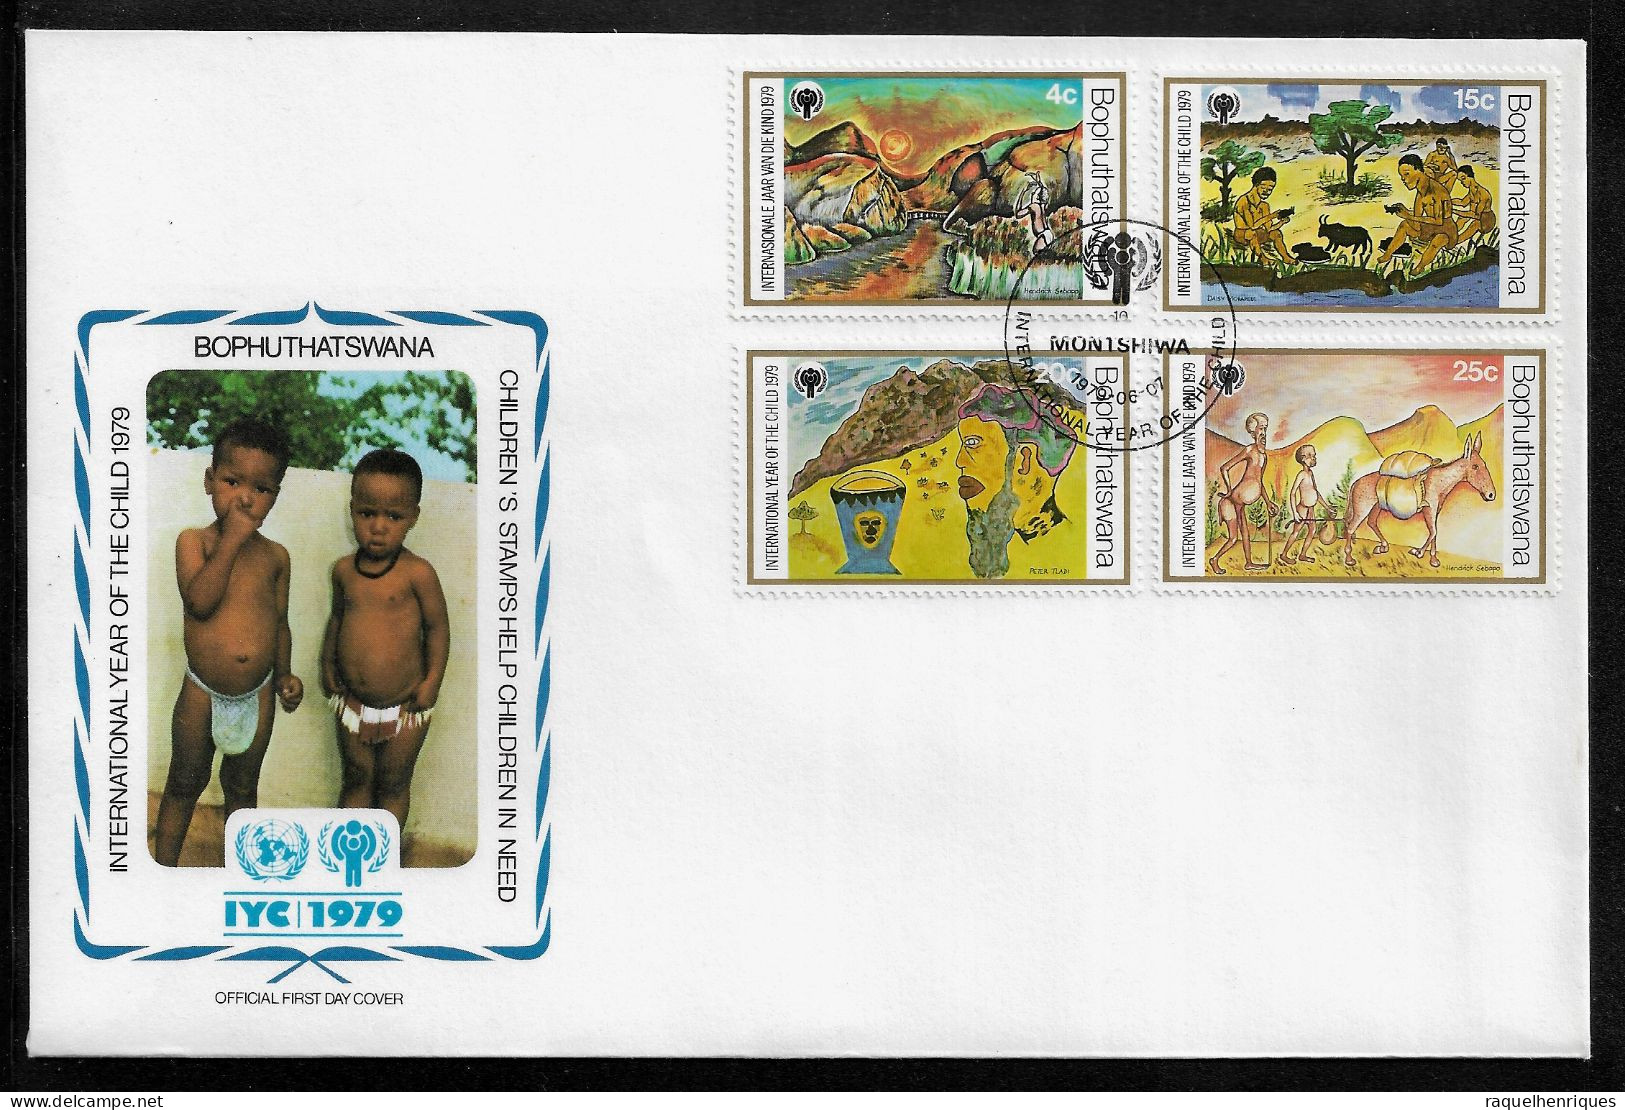 BOPHUTHATSWANA FDC COVER - 1979 International Year Of The Child - SET FDC (FDC79#03) - Bophuthatswana